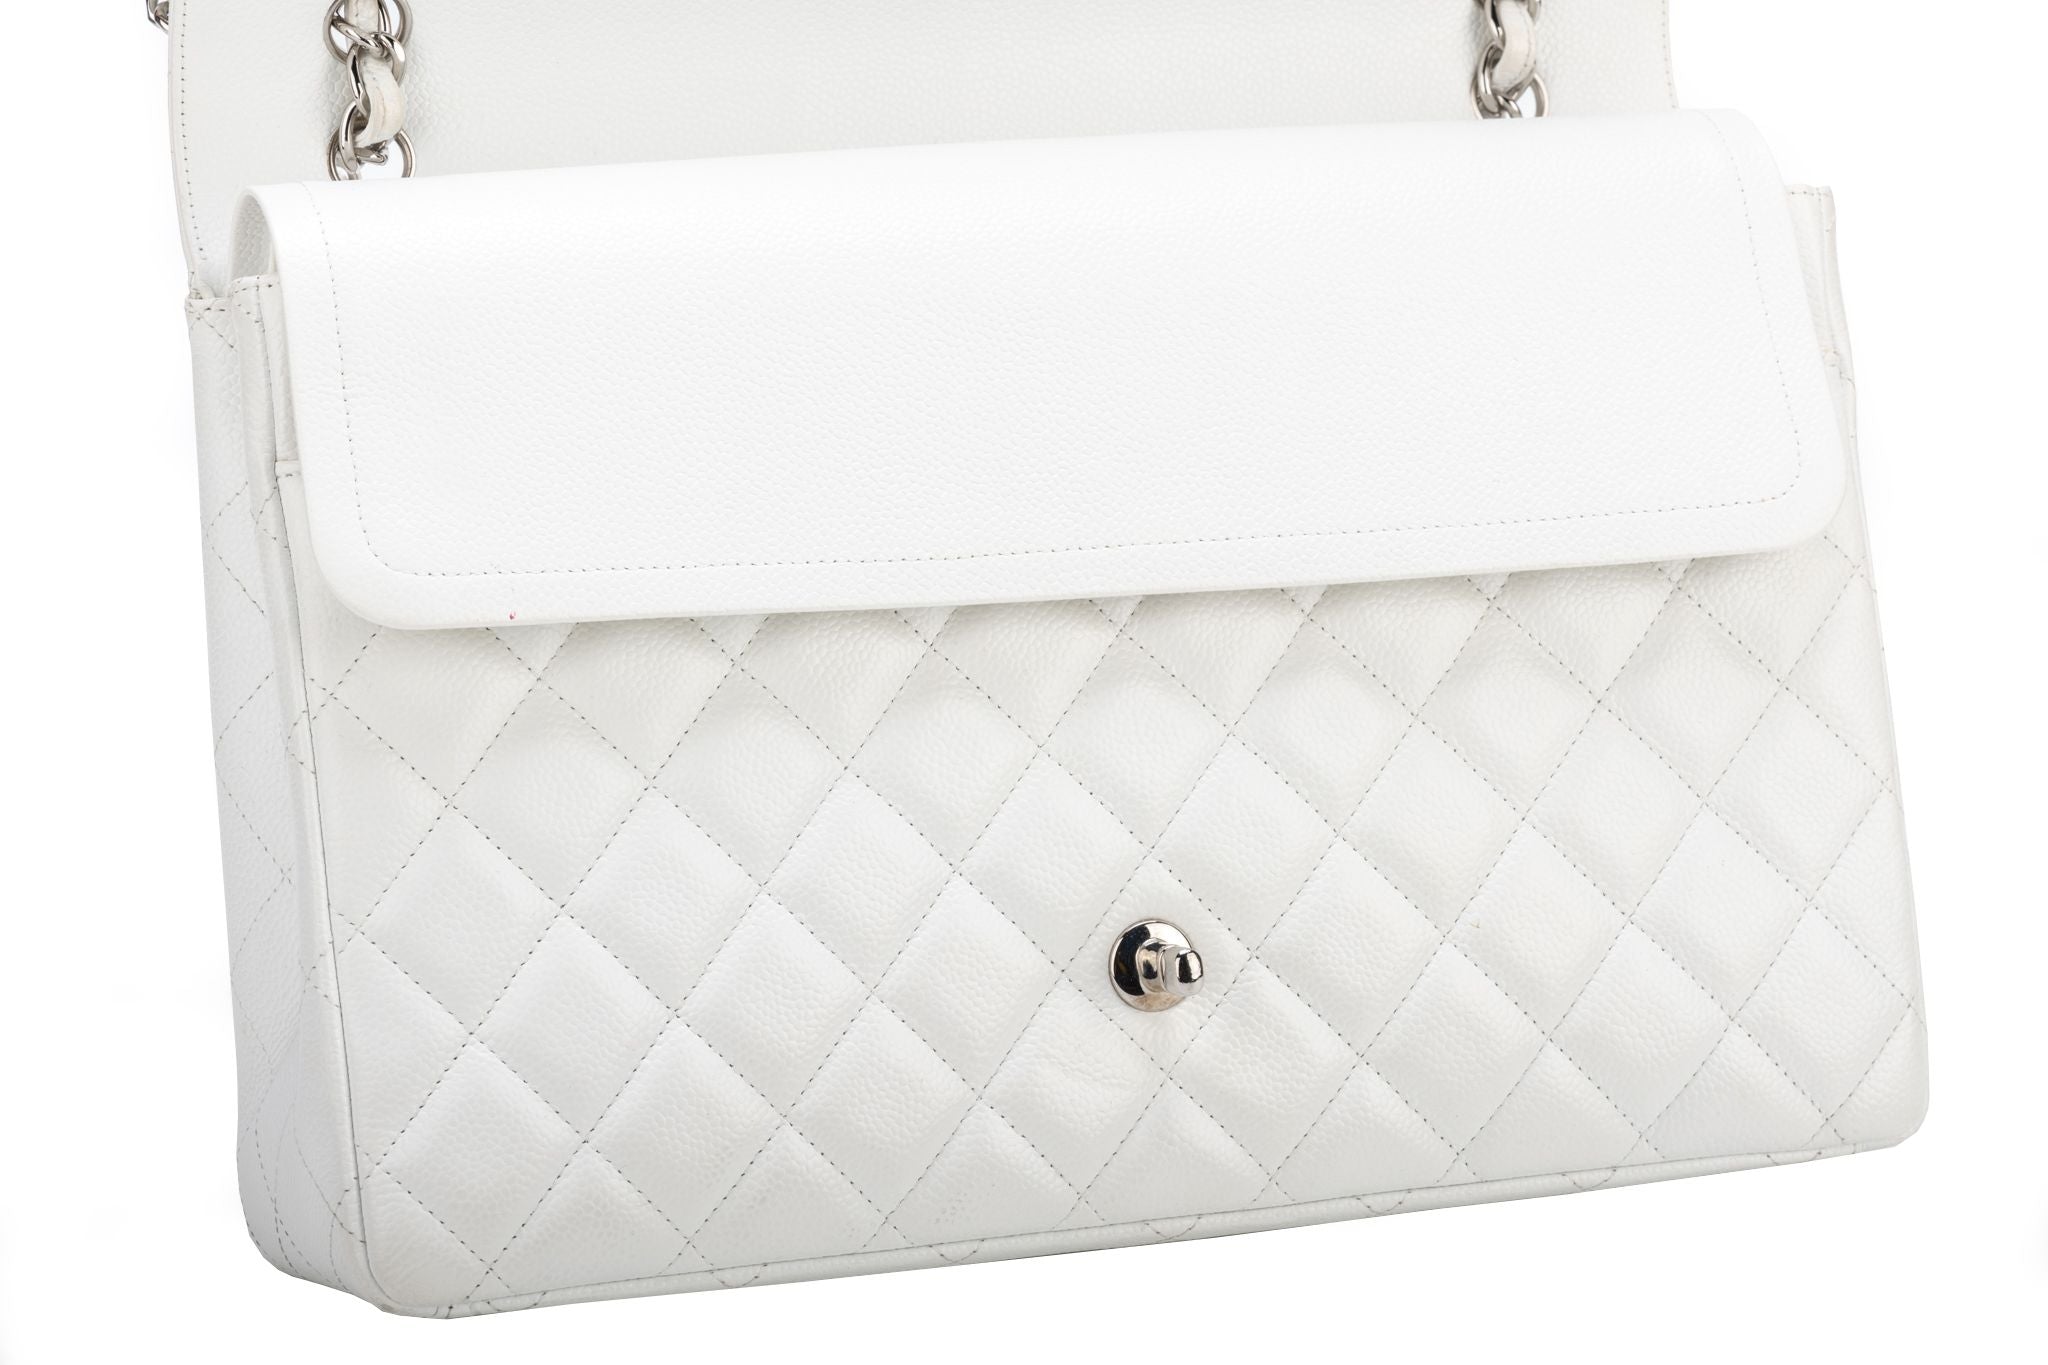 chanel white clutch handbag